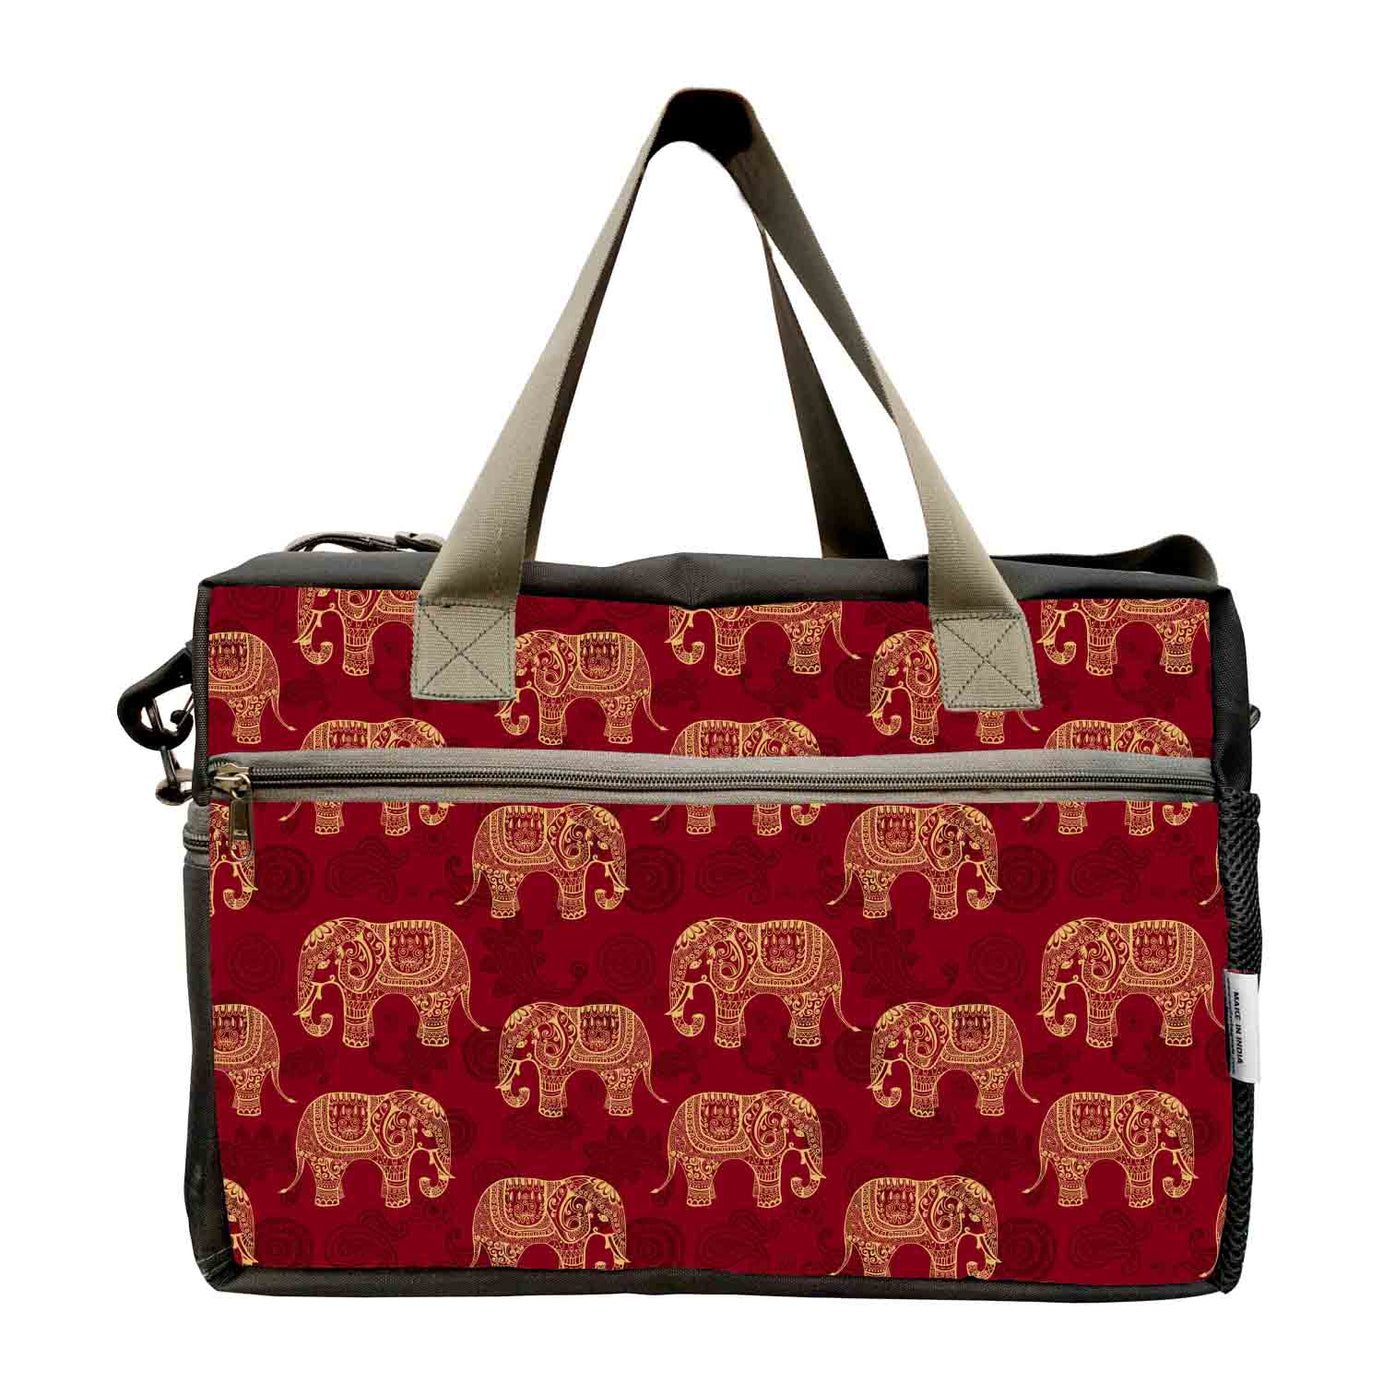 My Fav Traditional Elephant print Cabin Size Duffle Travel bag for Men Women